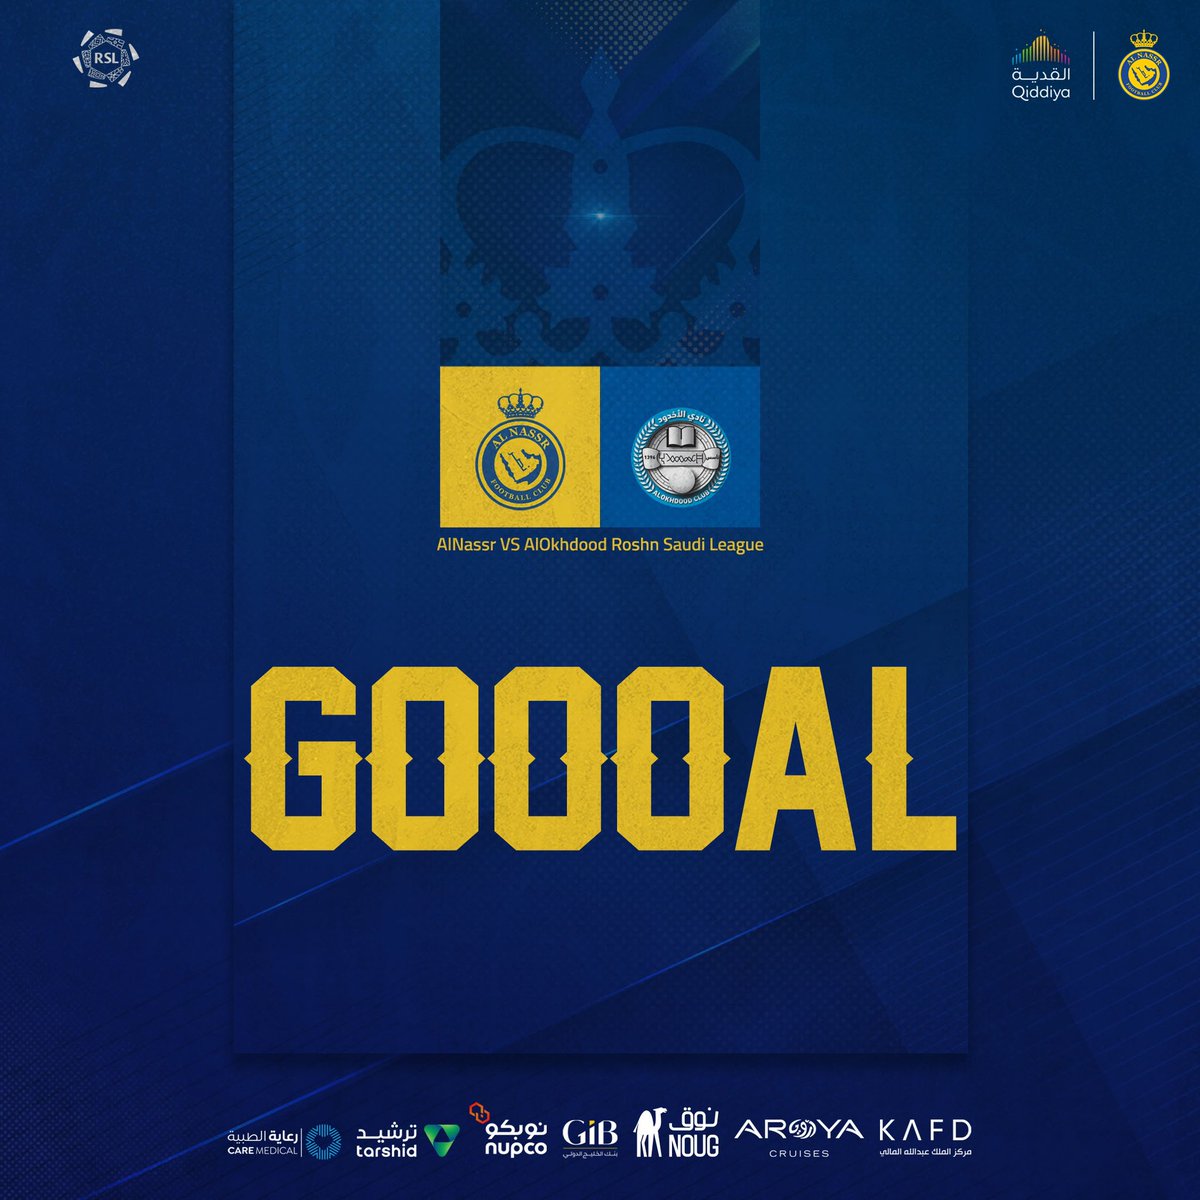 ⚽️ || GOOOOOAAAAL! 🤩🤩🤩 Brozović scores the third goal 90+1’ for @AlNassrFC #AlNassr 3:2 #AlOkhdood